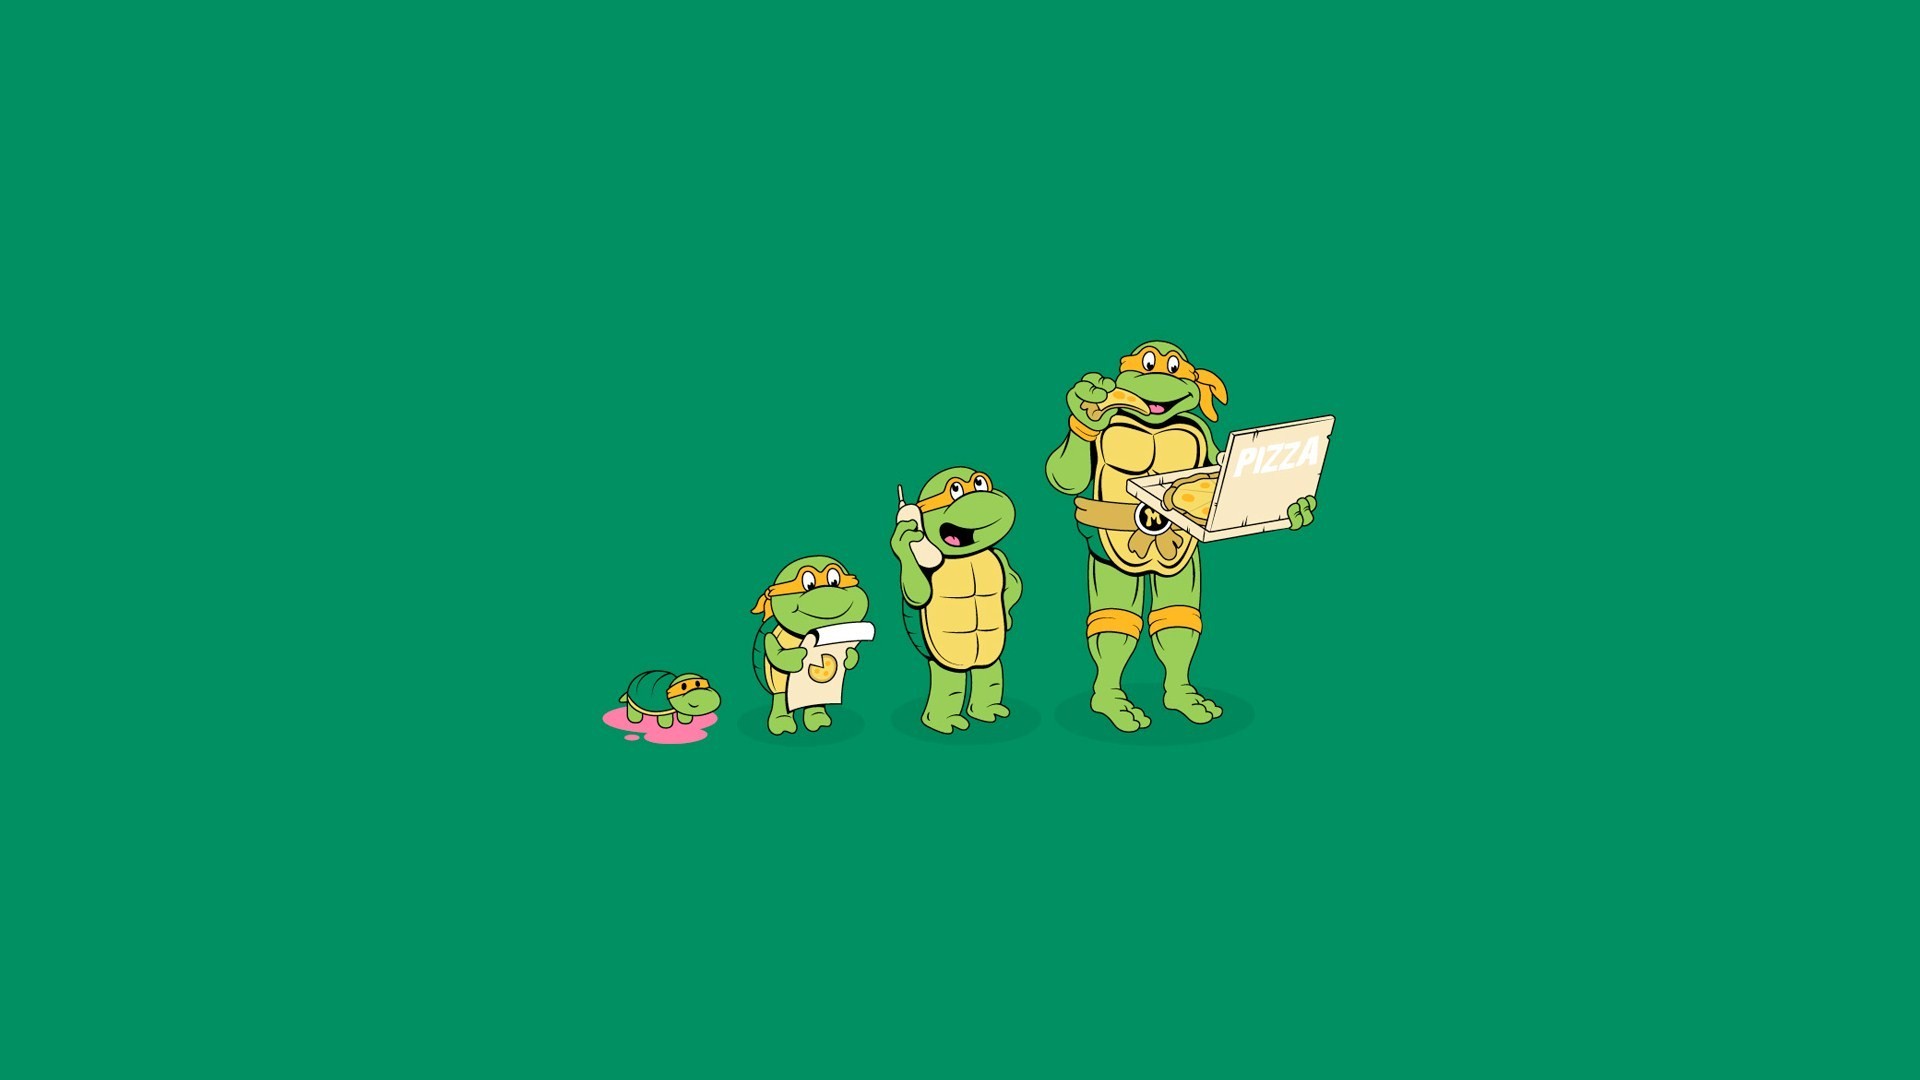 General 1920x1080 Teenage Mutant Ninja Turtles minimalism pizza humor green background green simple background food